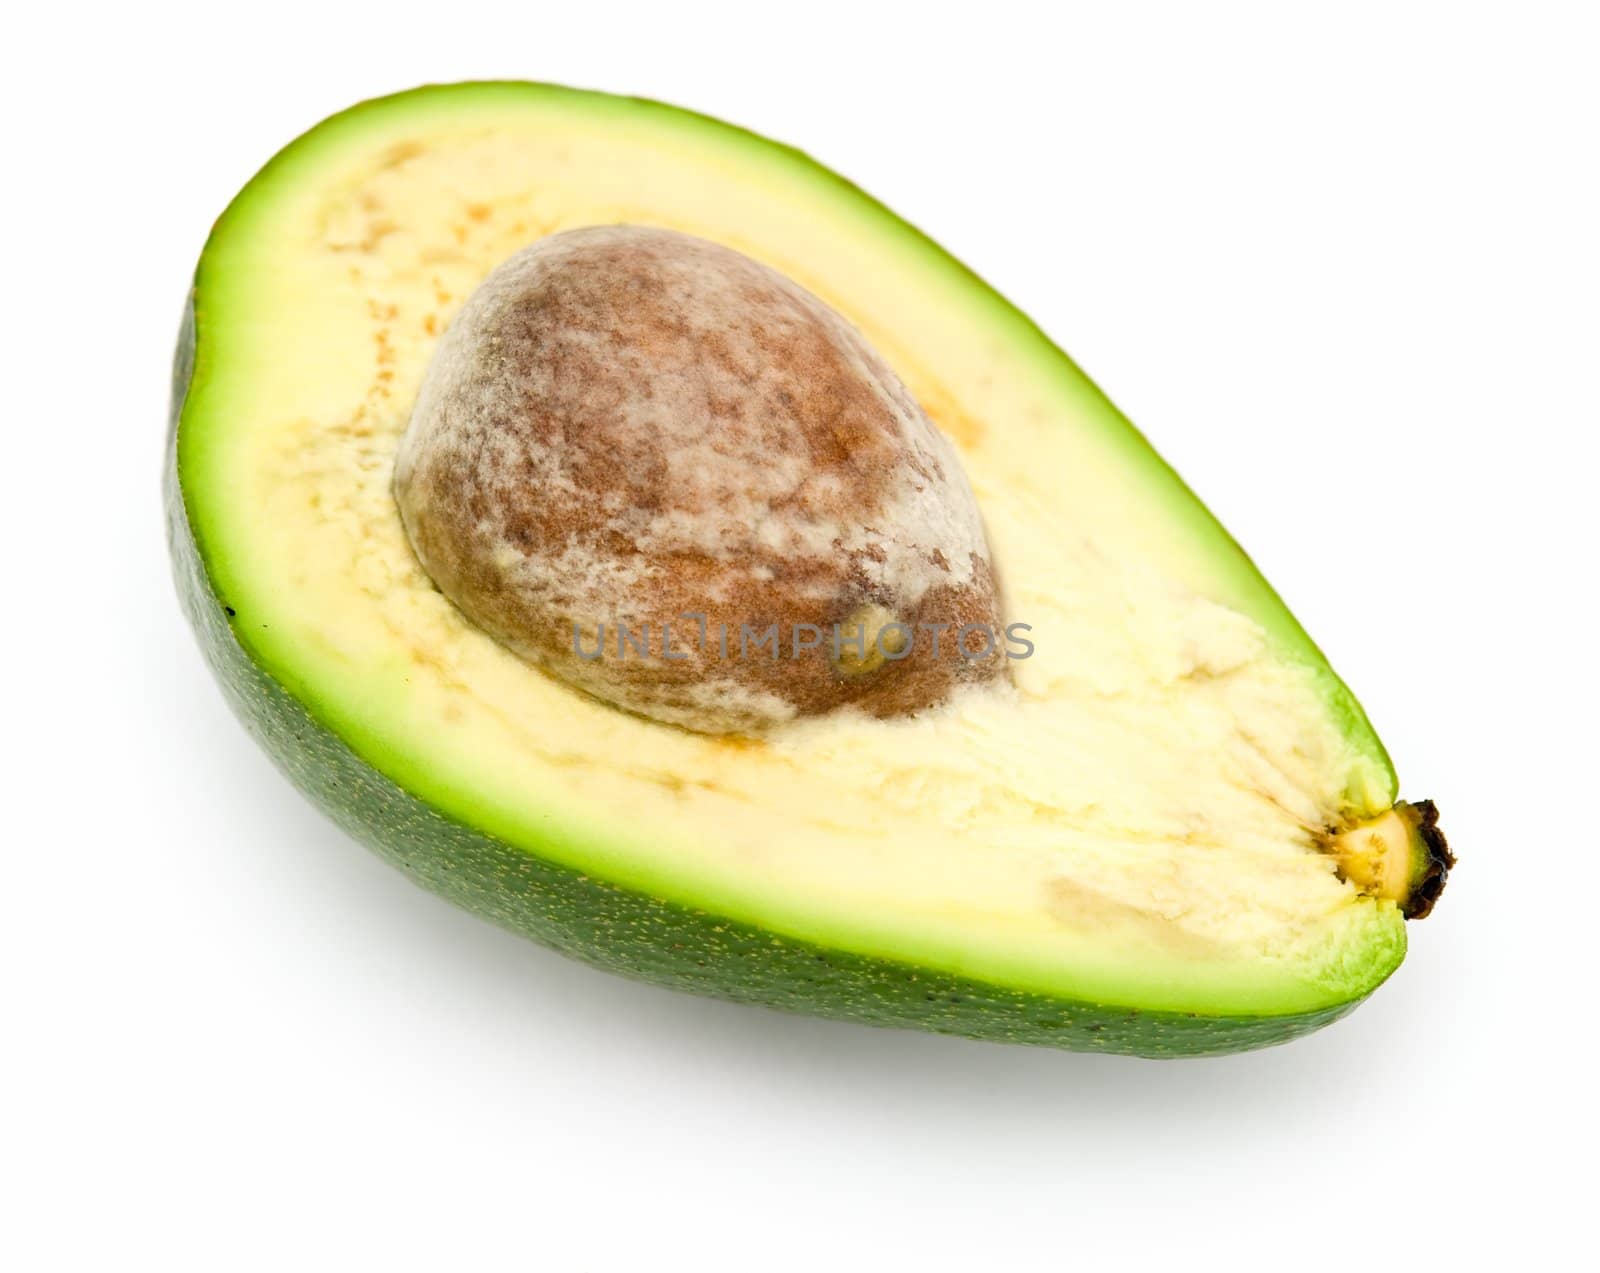 Half avocado with stone on a white background